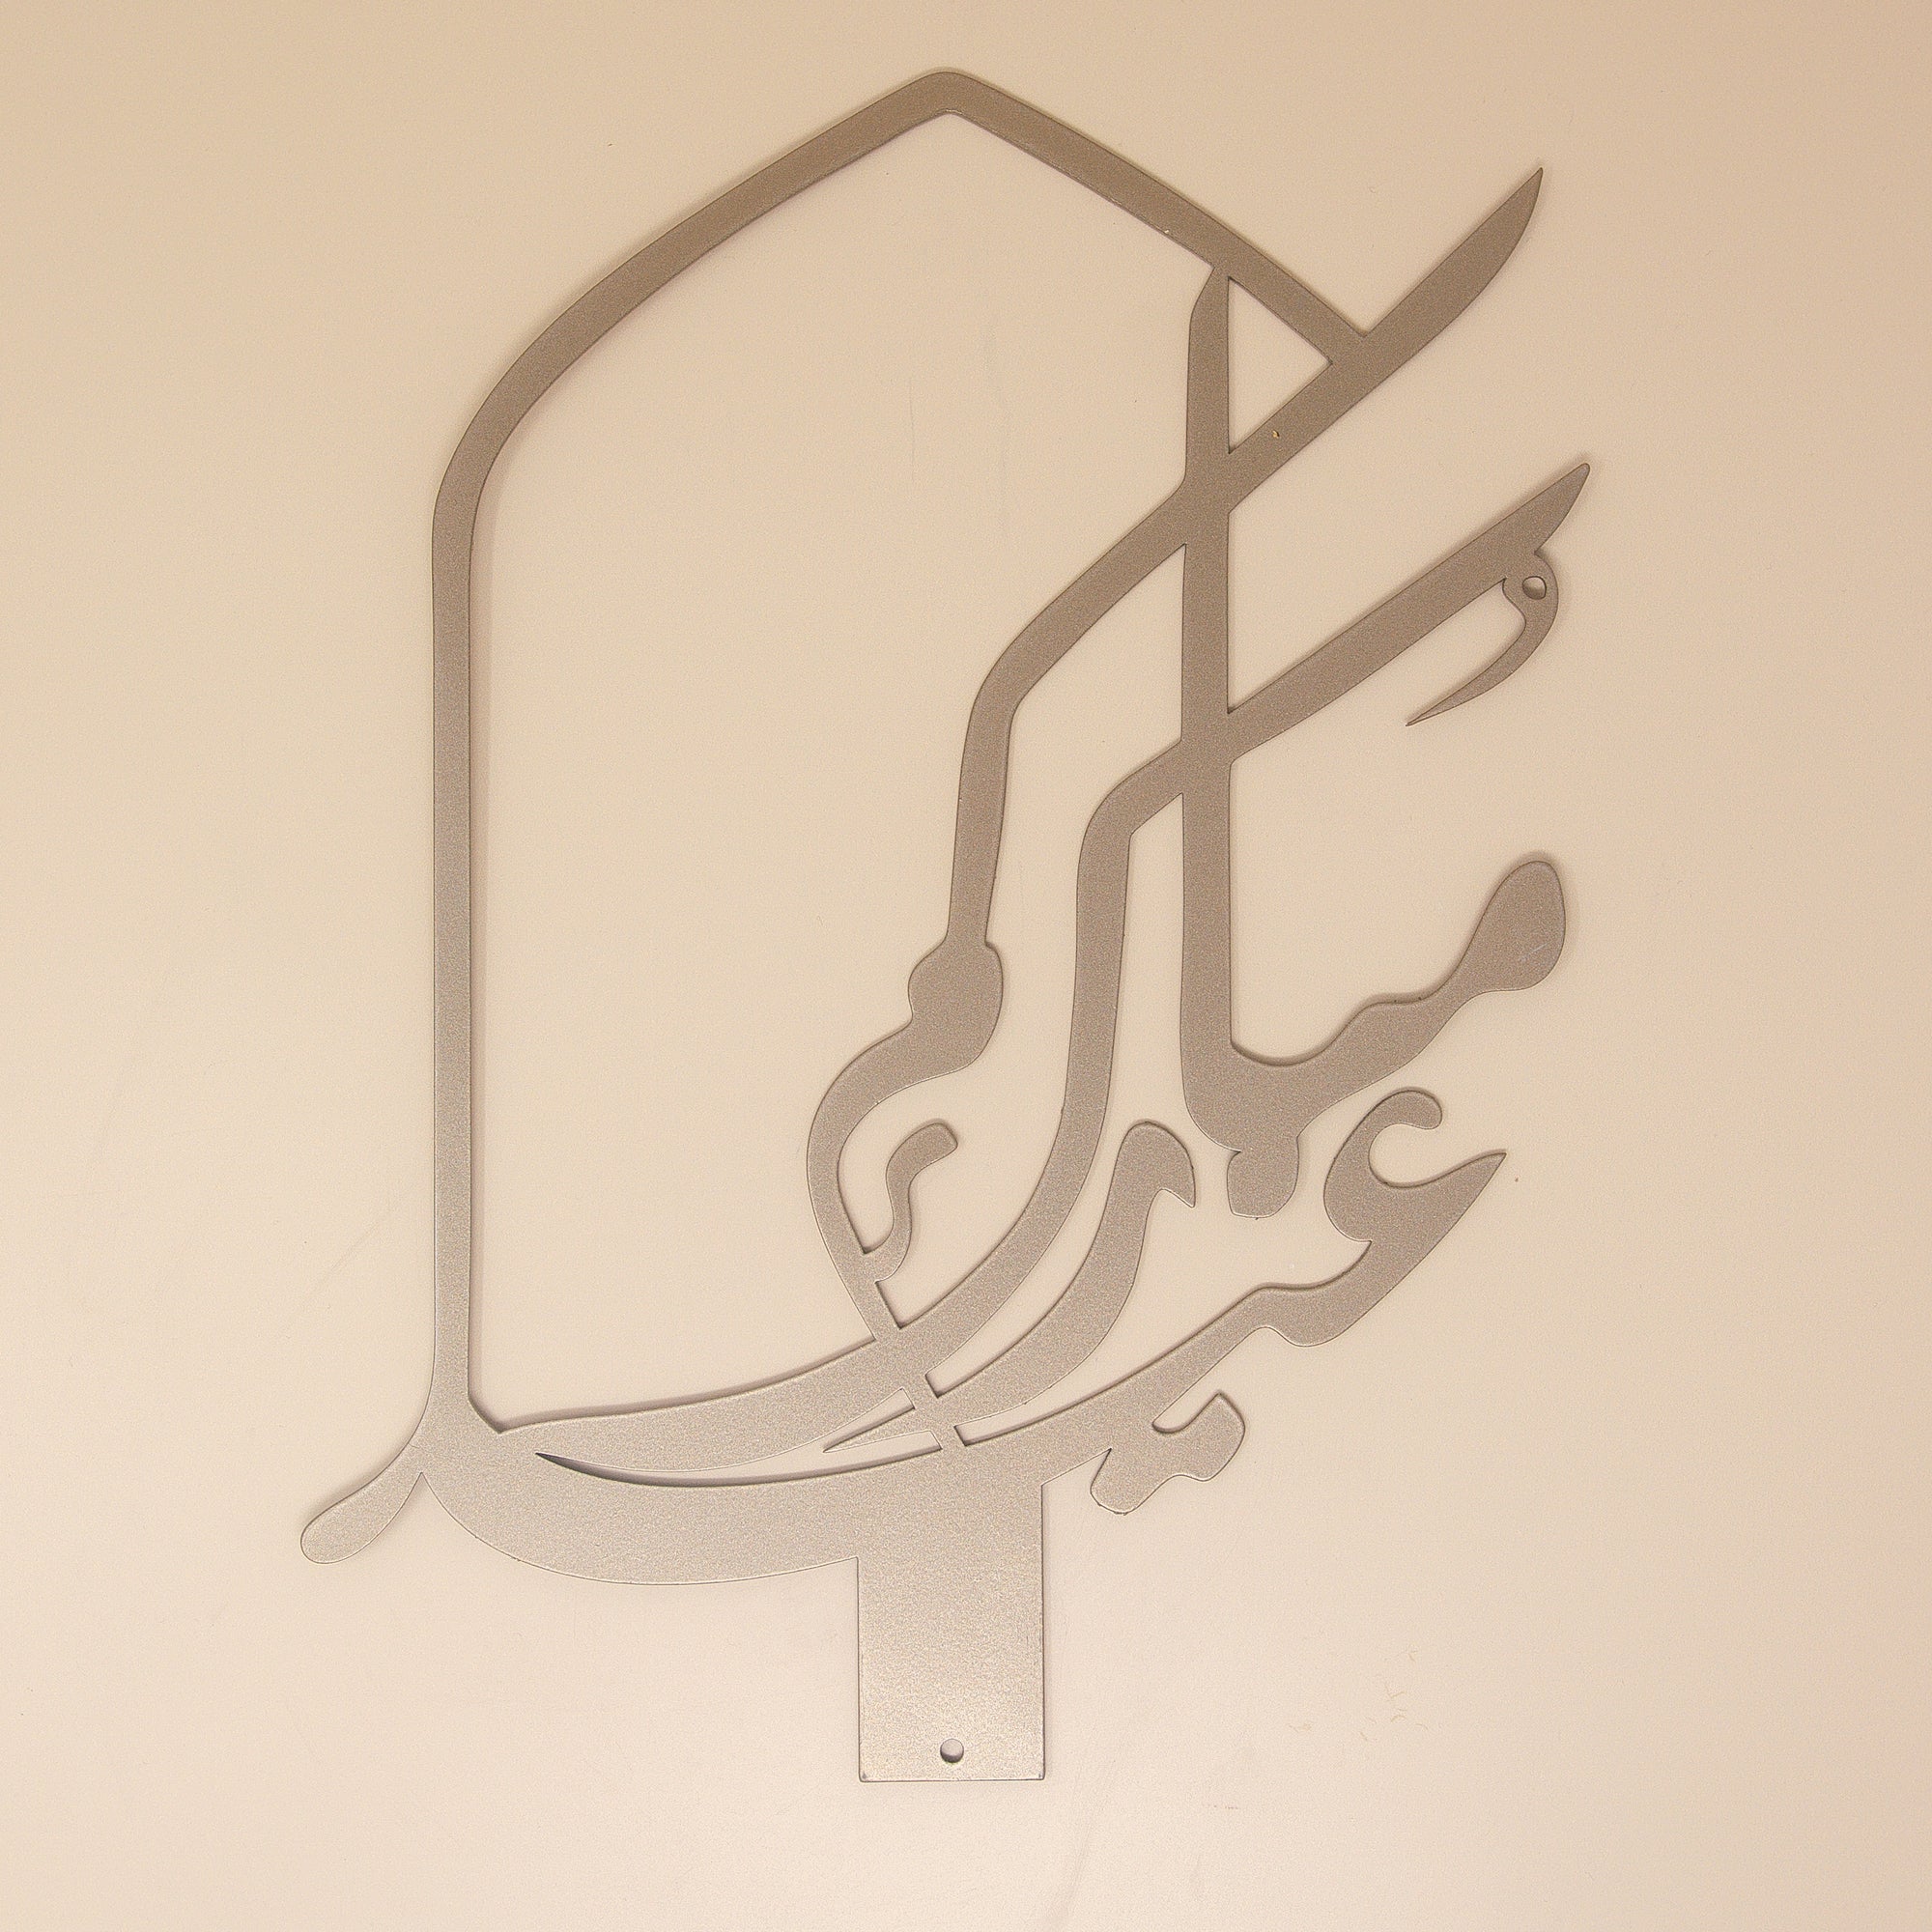 Eid Mubarak Arabic Calligraphy